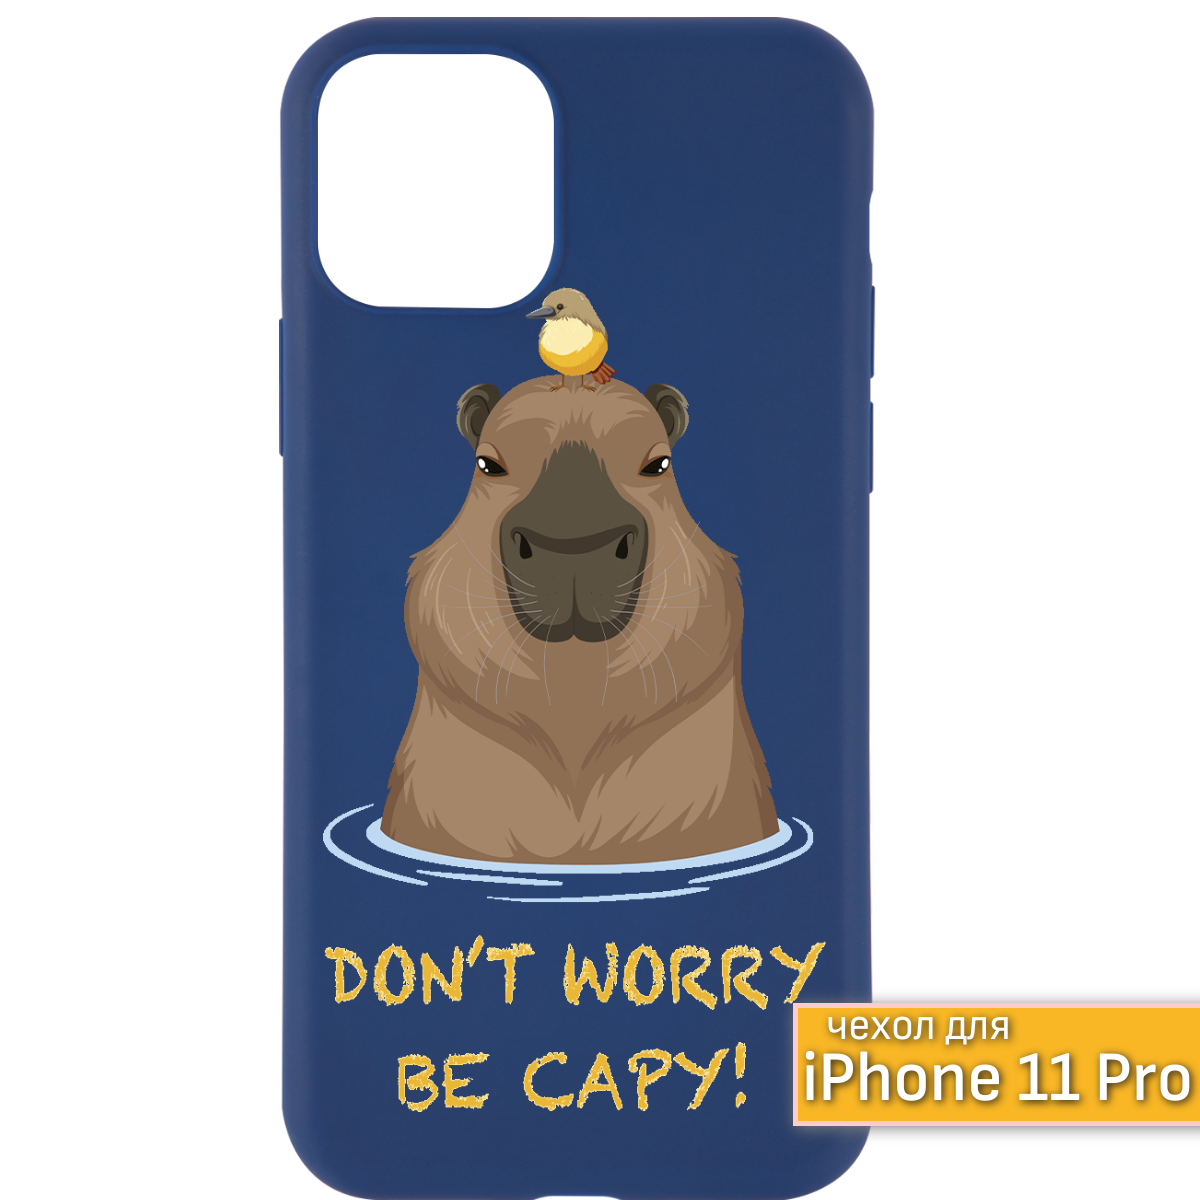 Защитный чехол на iPhone 11 Pro Капибара. айфон 11 про чехол Capybar/Капибара чехол айфон 11 про, чехол синий